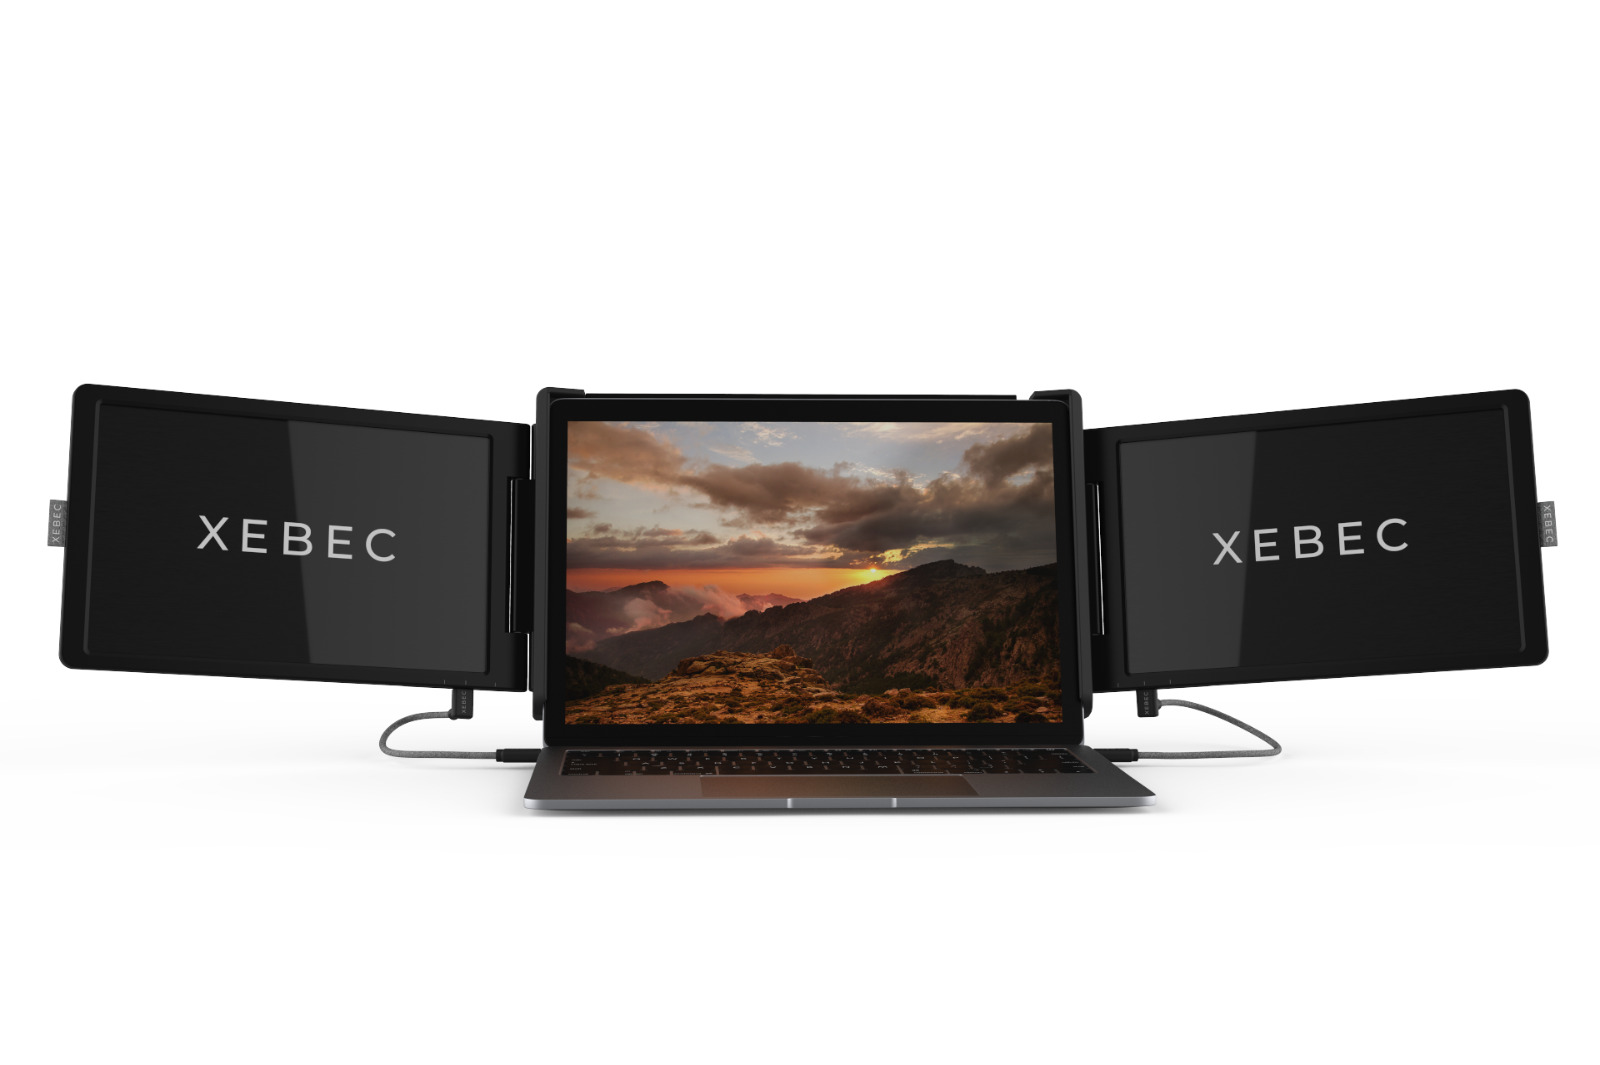 Xebec Tri Screen 2 Dual 10.1 Inch 1920 x 1200 Full-HD LCD IPS Panel Monitors